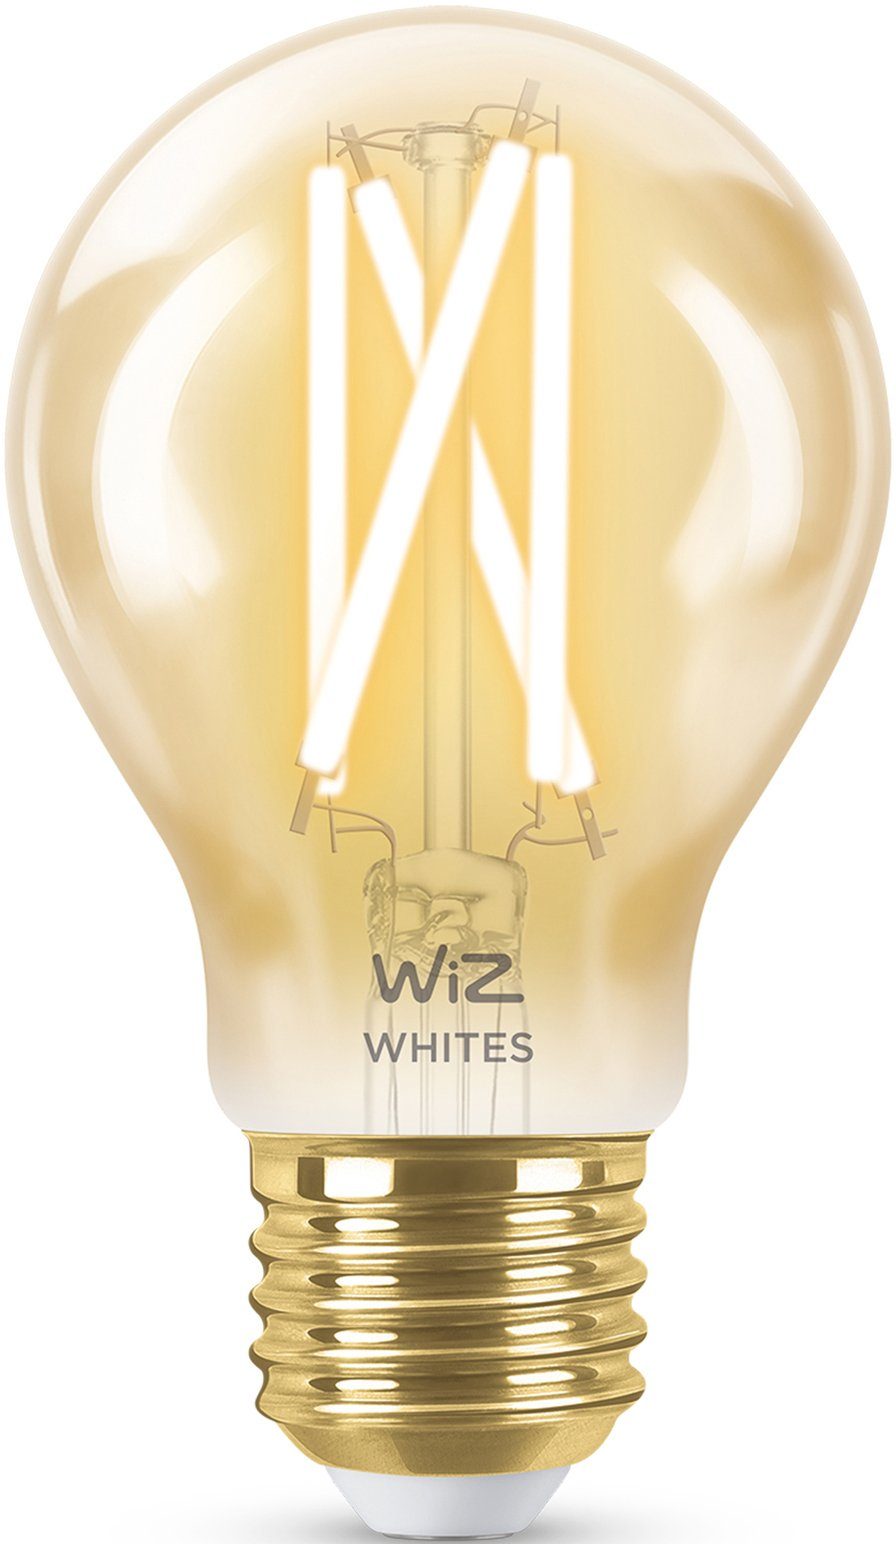 WiZ LED-Filament Filament 50W E27 Standardform Amber Einzelpack, E27, 1 St., Warmweiß, Wiz Tunable White Filament LED Lampen für klassisches Vintage-Design